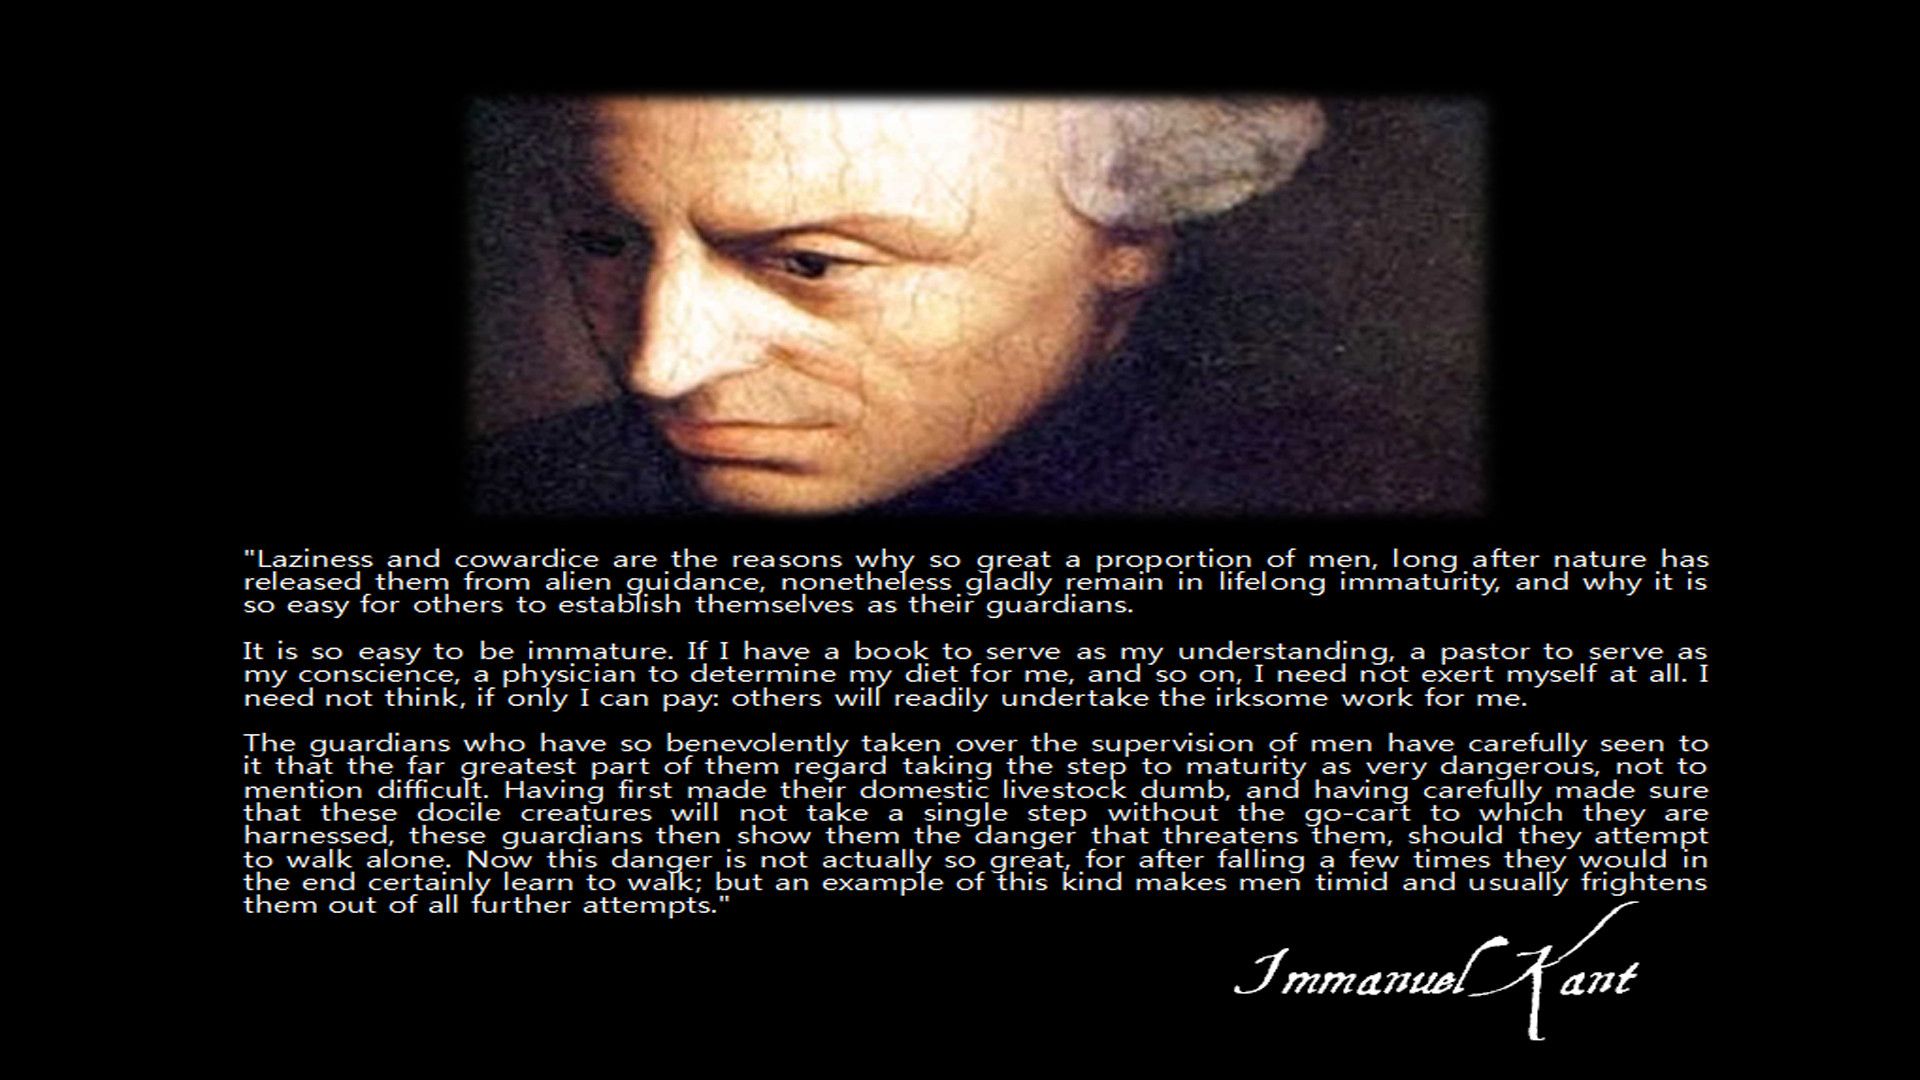 Immanuel Kant on Lifelong Immaturity [1920 X 1080]